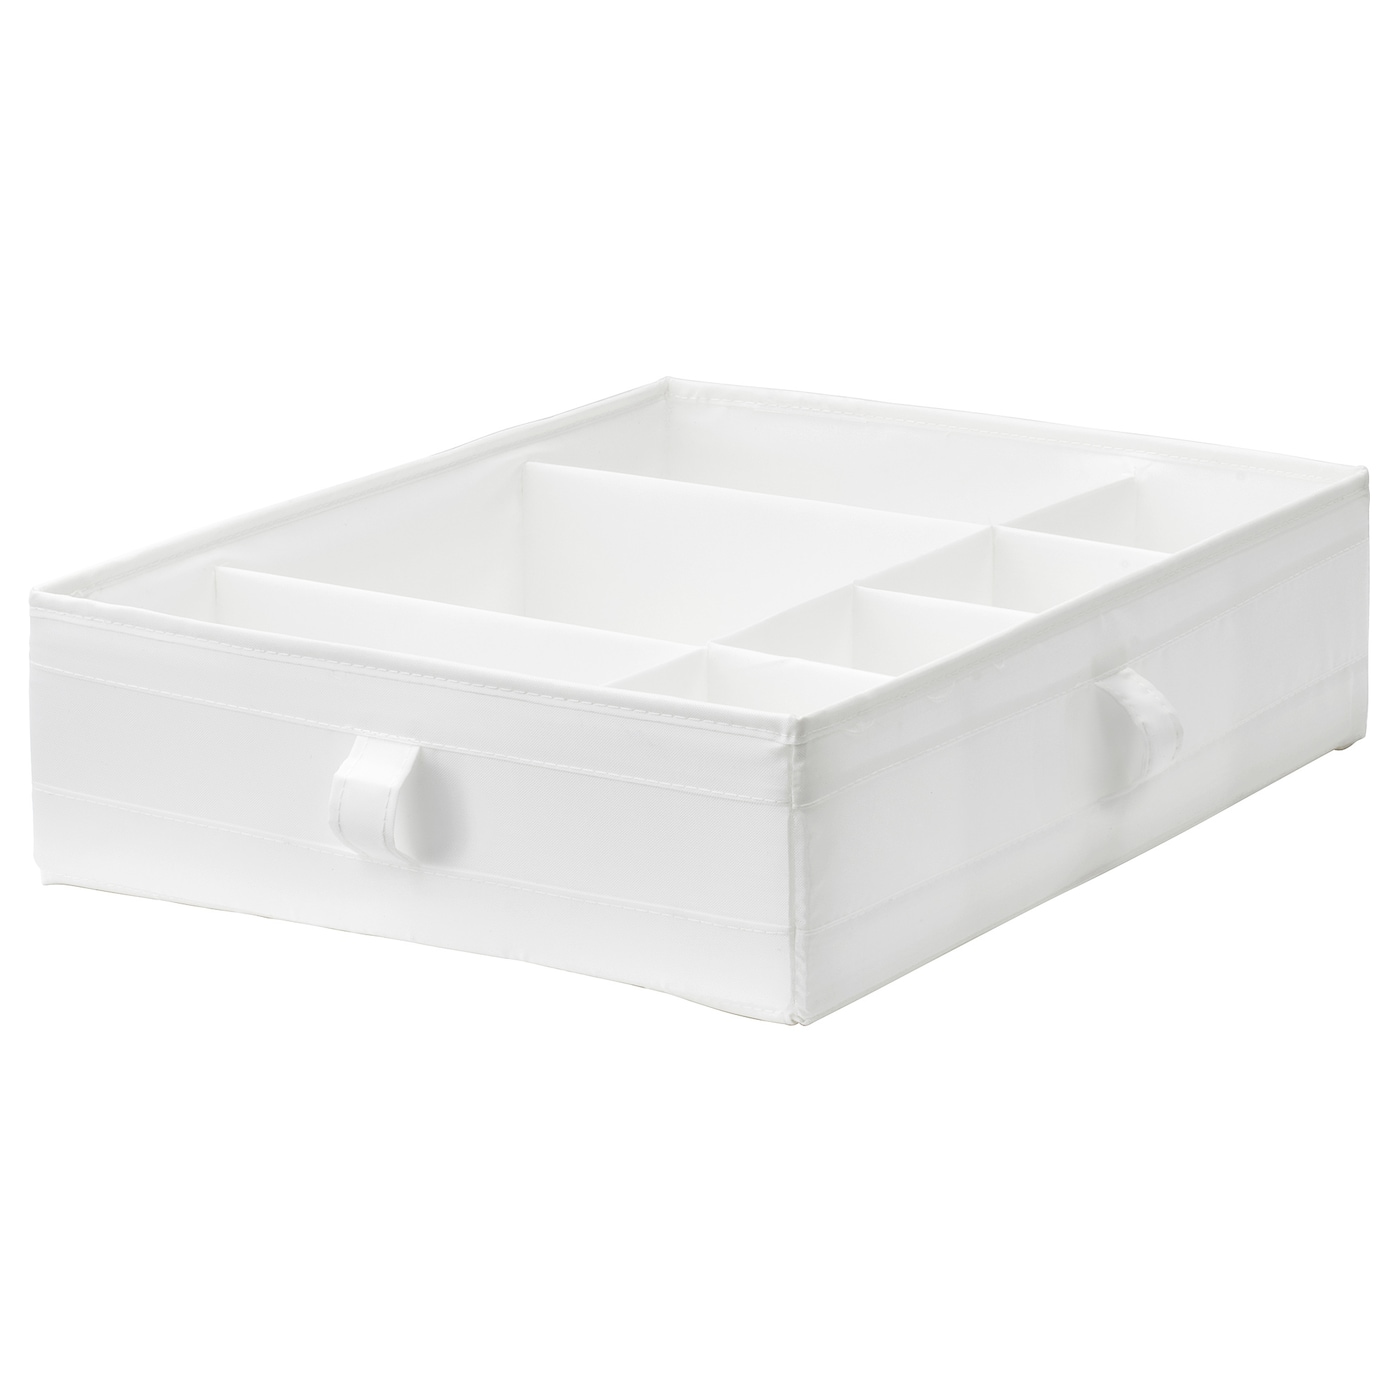 SKUBB box with compartments white - IKEA